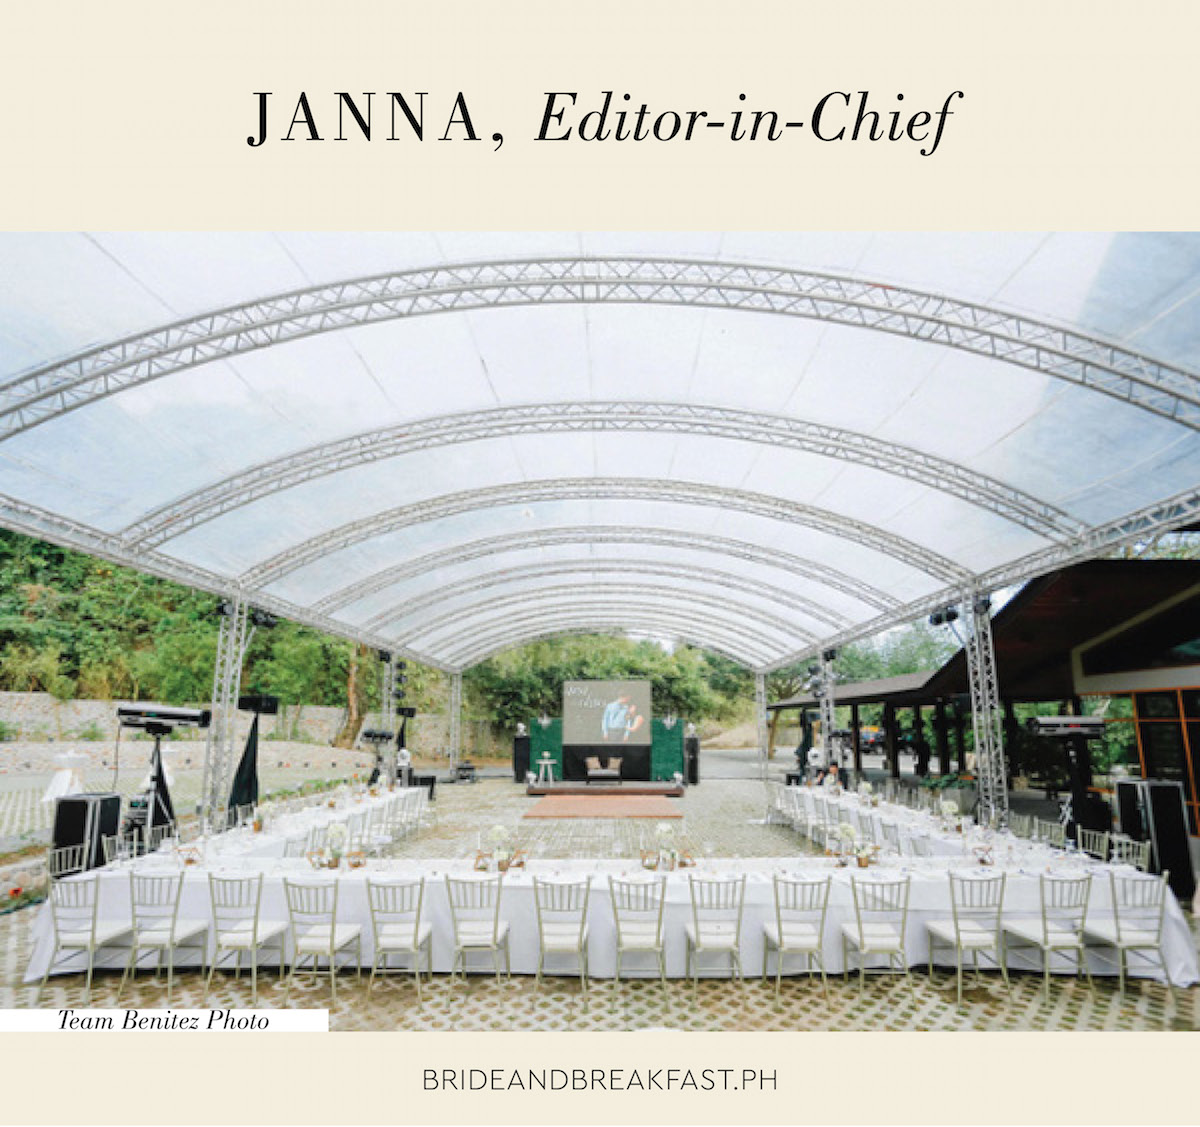 Janna, Editor-in-Chief Photo: Team Benitez Photo